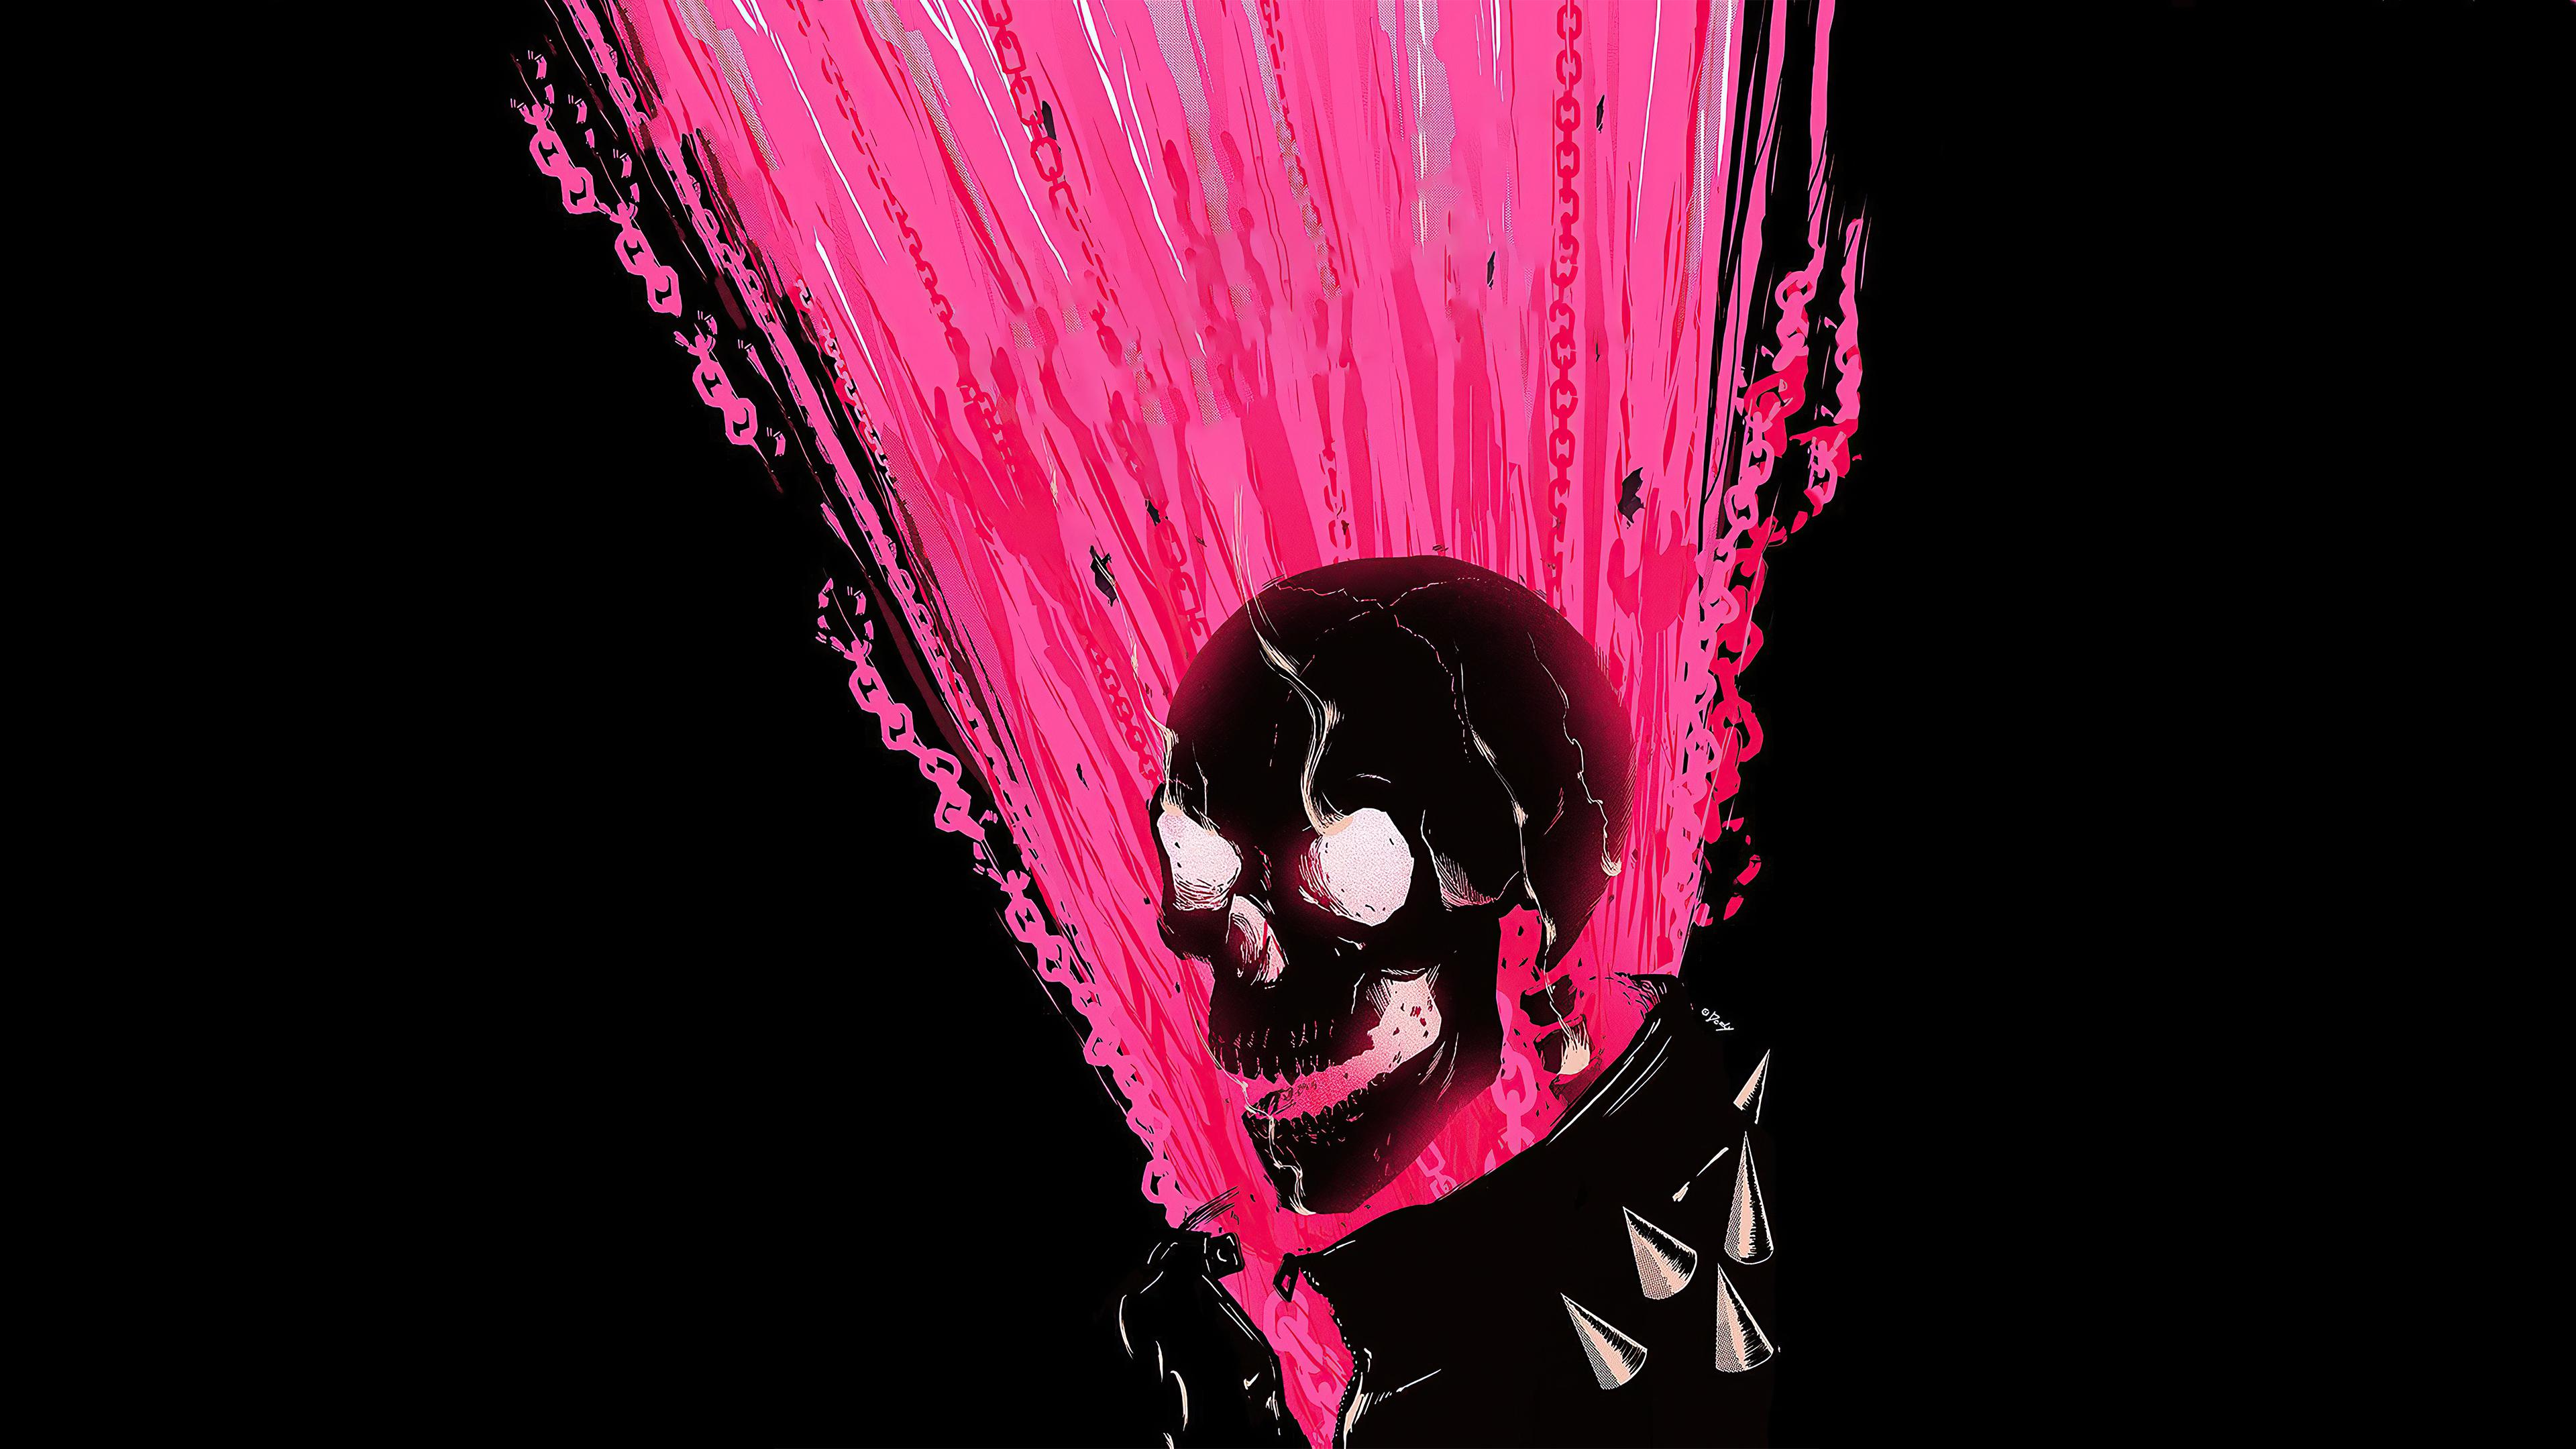 Digital Art Artwork Illustration Skull Black Background Minimalism Pink Ghost Rider 4K Marvel Comics 3840x2160